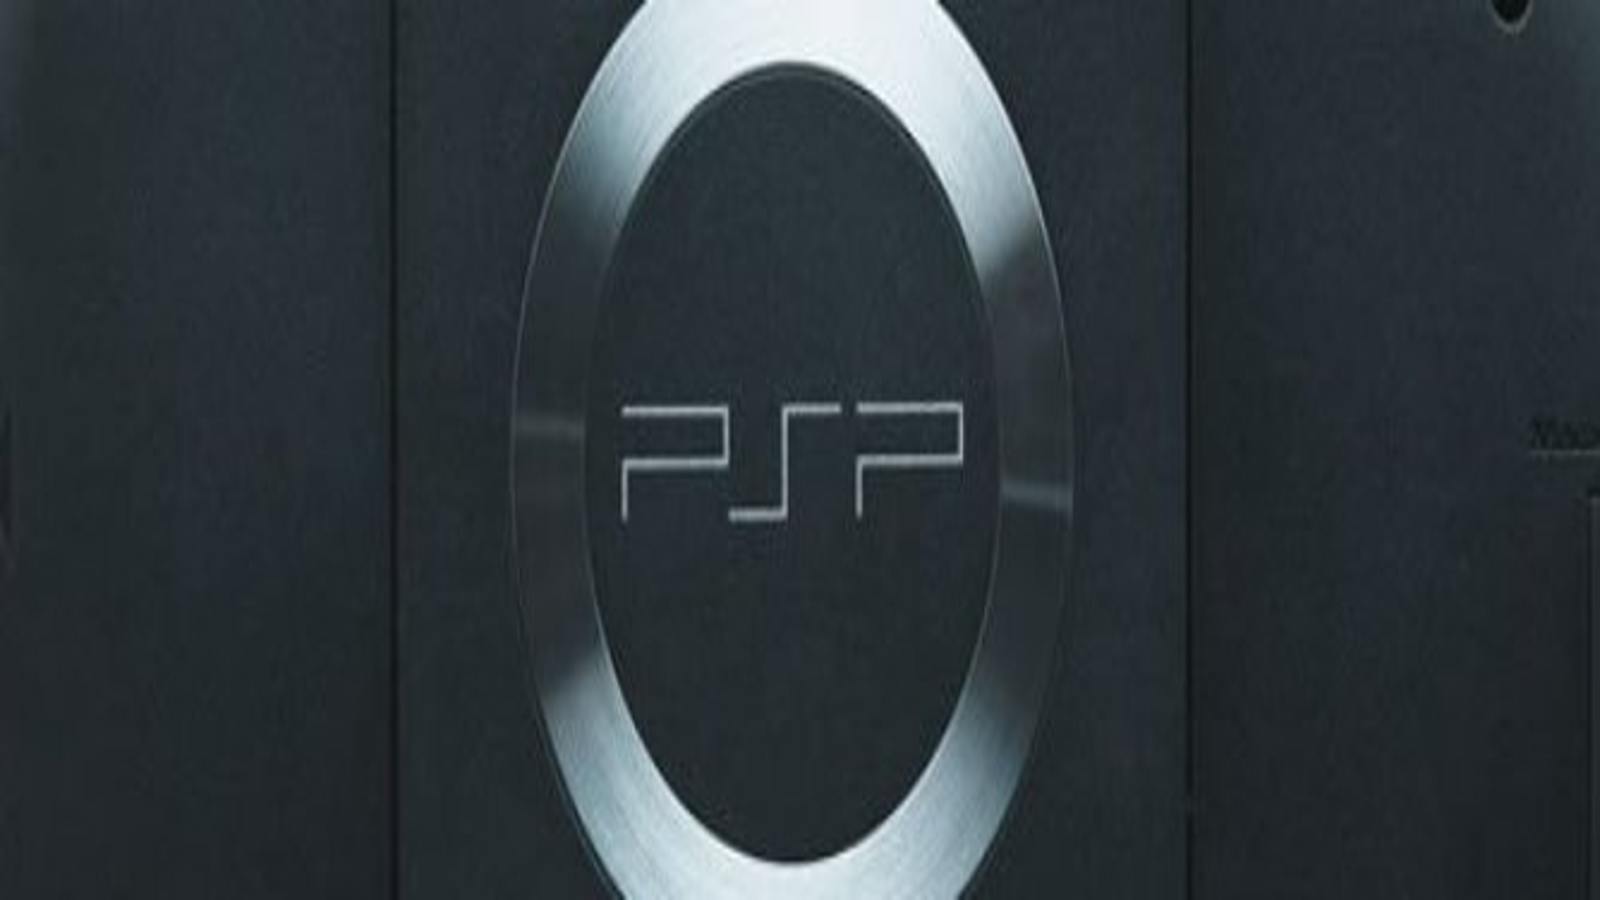 psp logo wallpaper hd